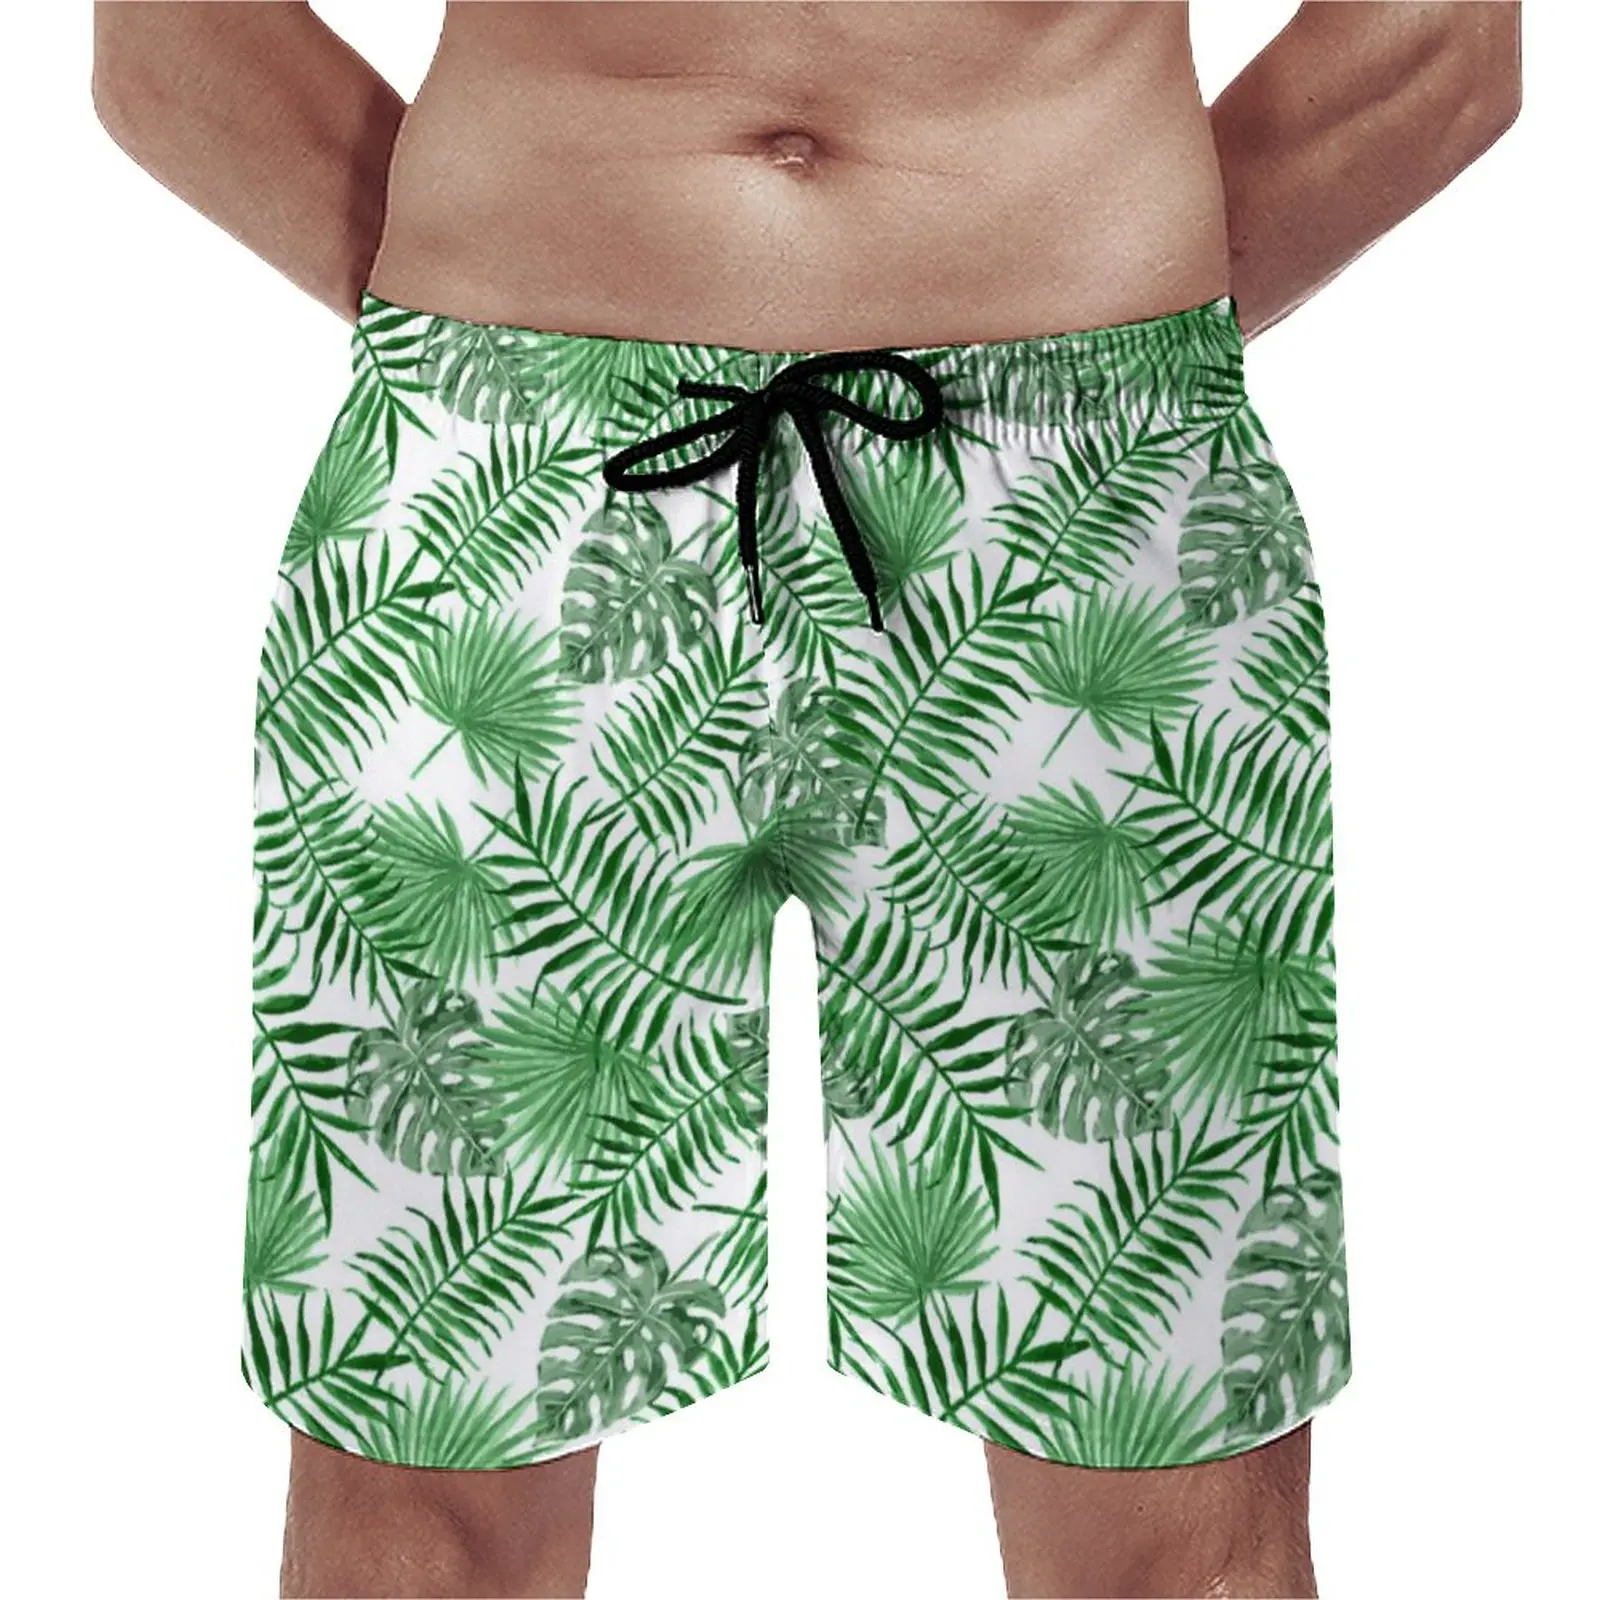 

Palmtree Leaves Board Shorts Tropical Plants Print Hawaii Board Short Pants Males Design Running Surf Fast Dry Beach Trunks Gift